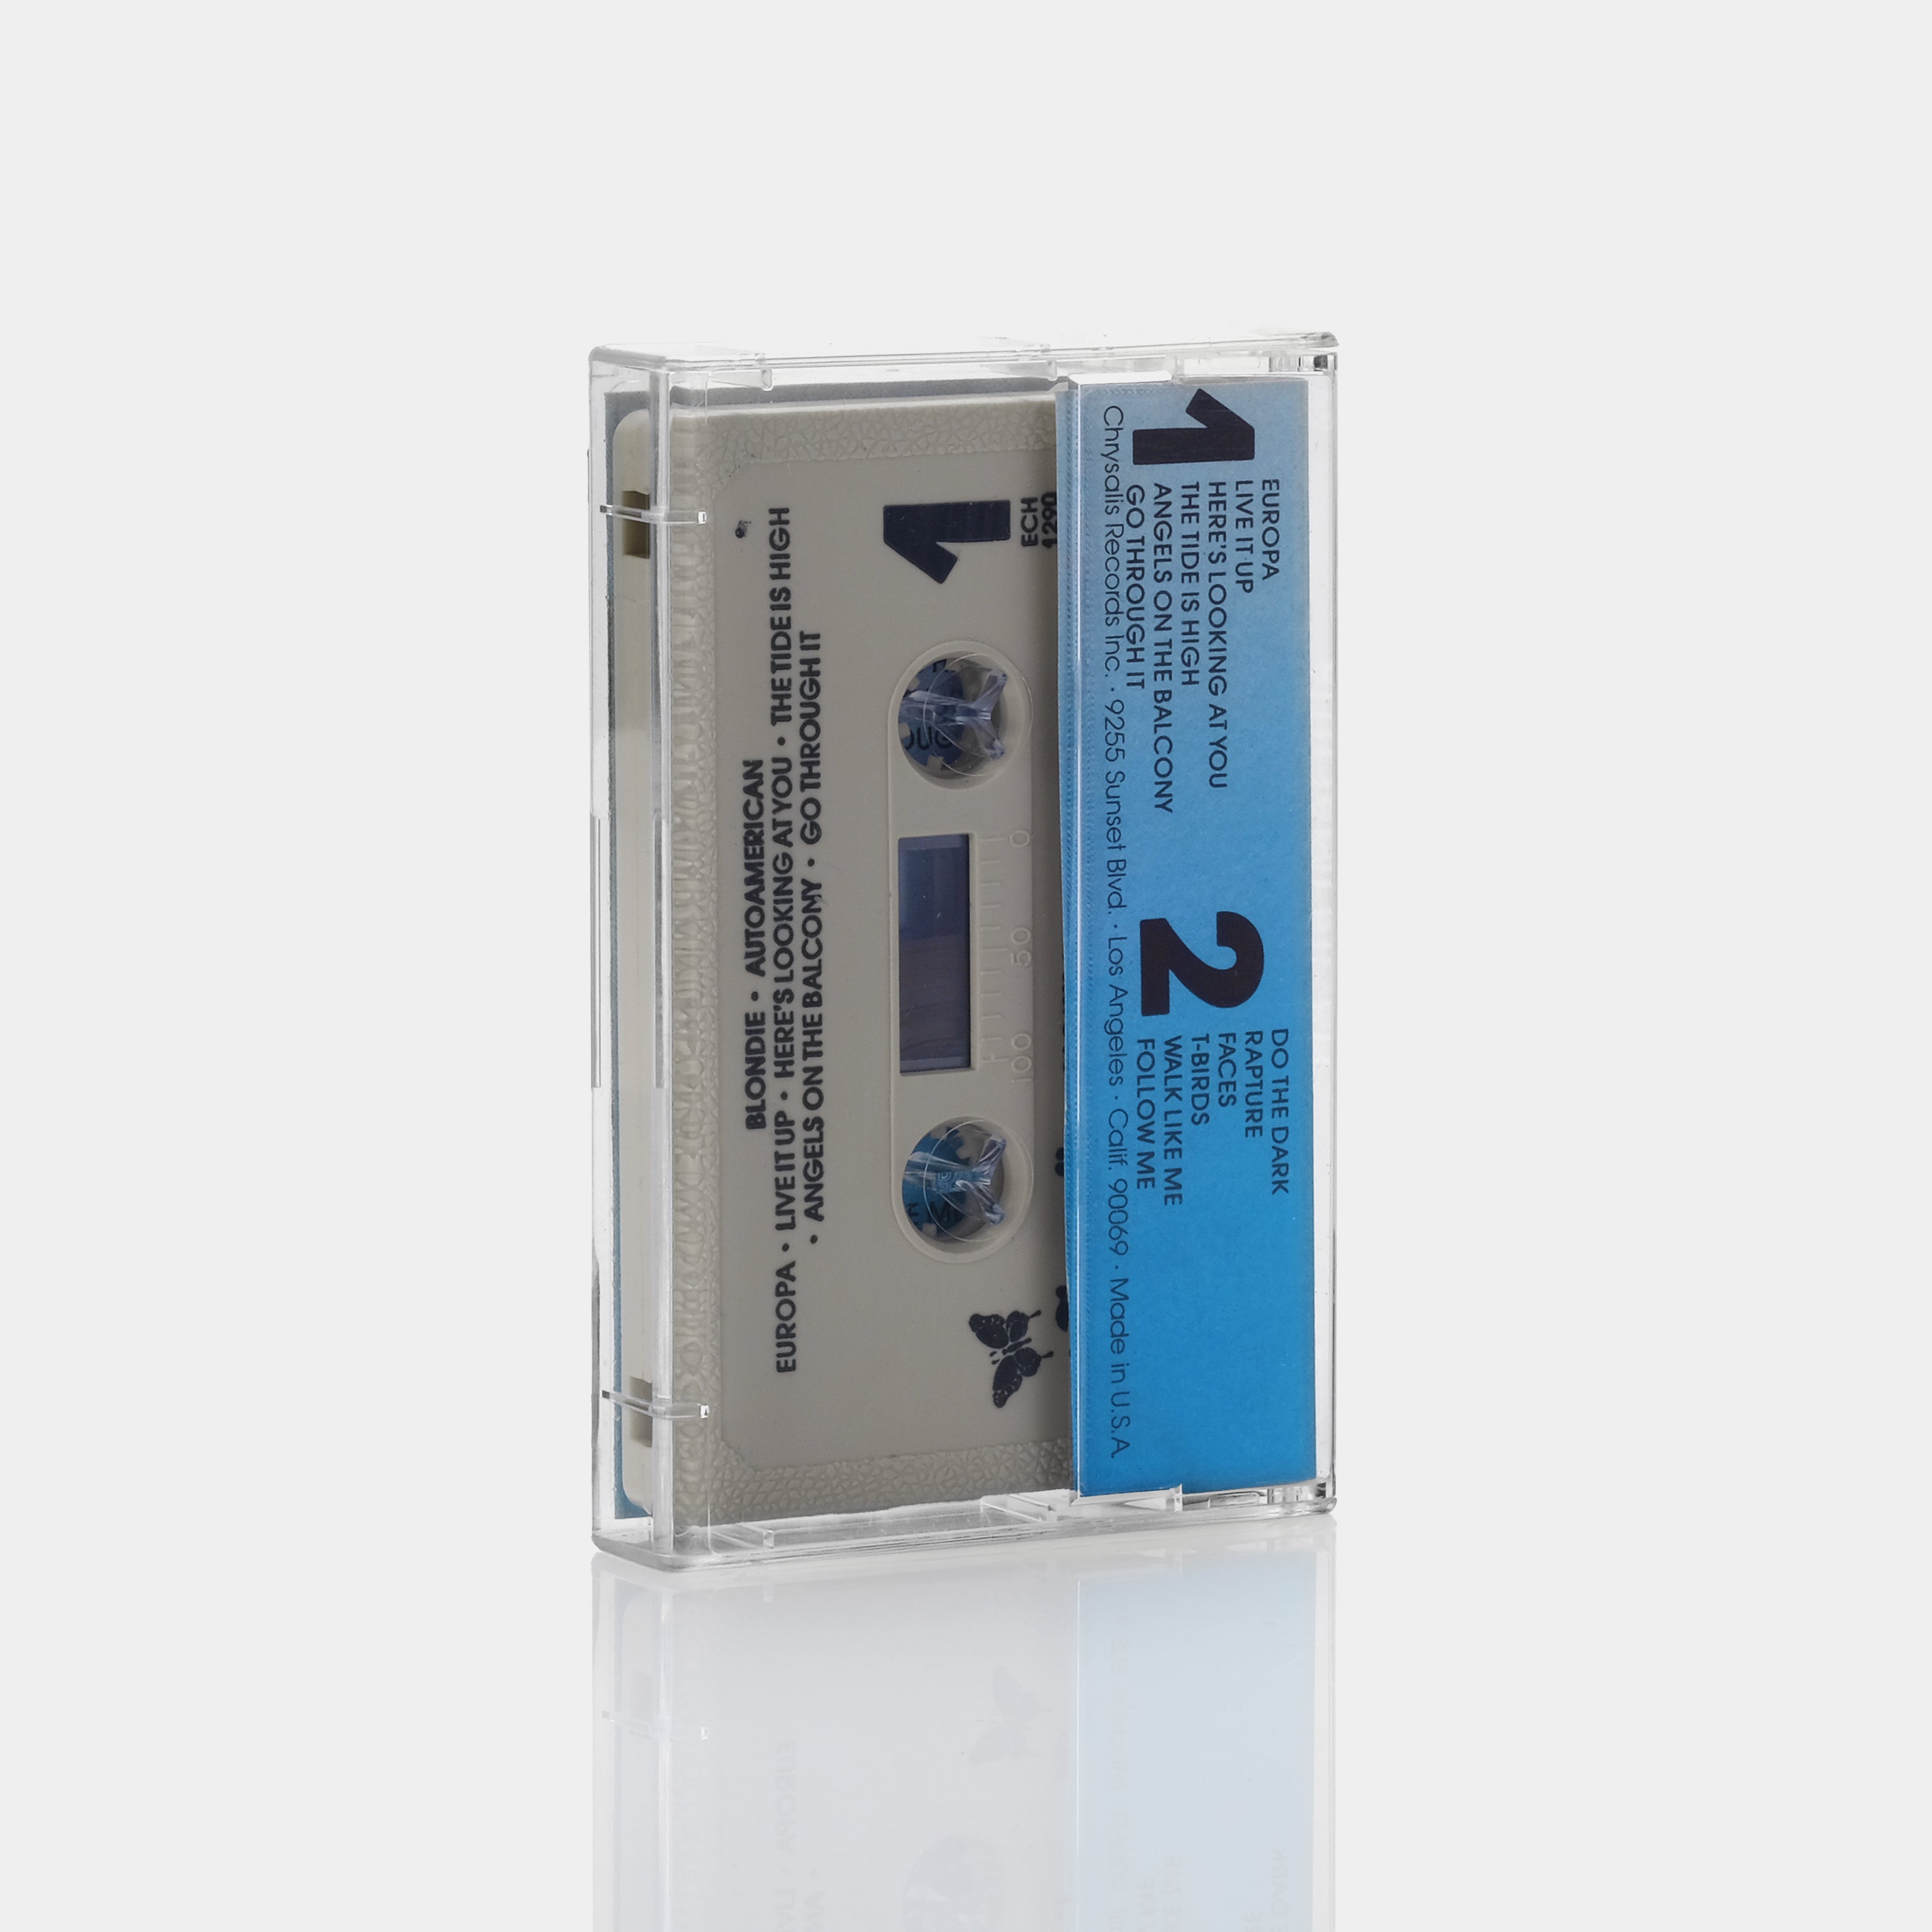 Blondie - Autoamerican Cassette Tape